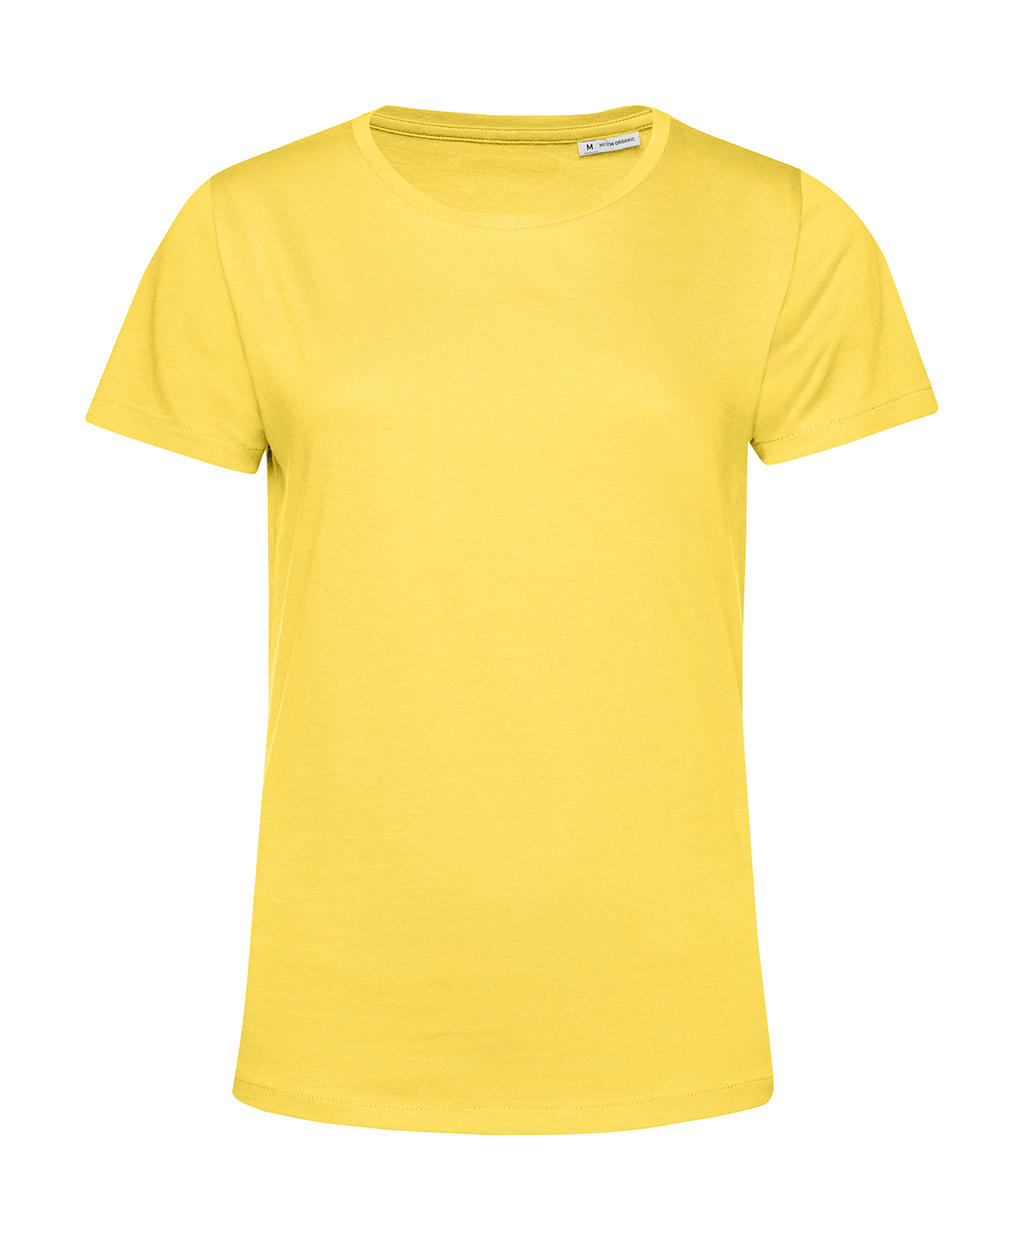 Tričko dámské BC Organic Inspire E150 - žluté, M